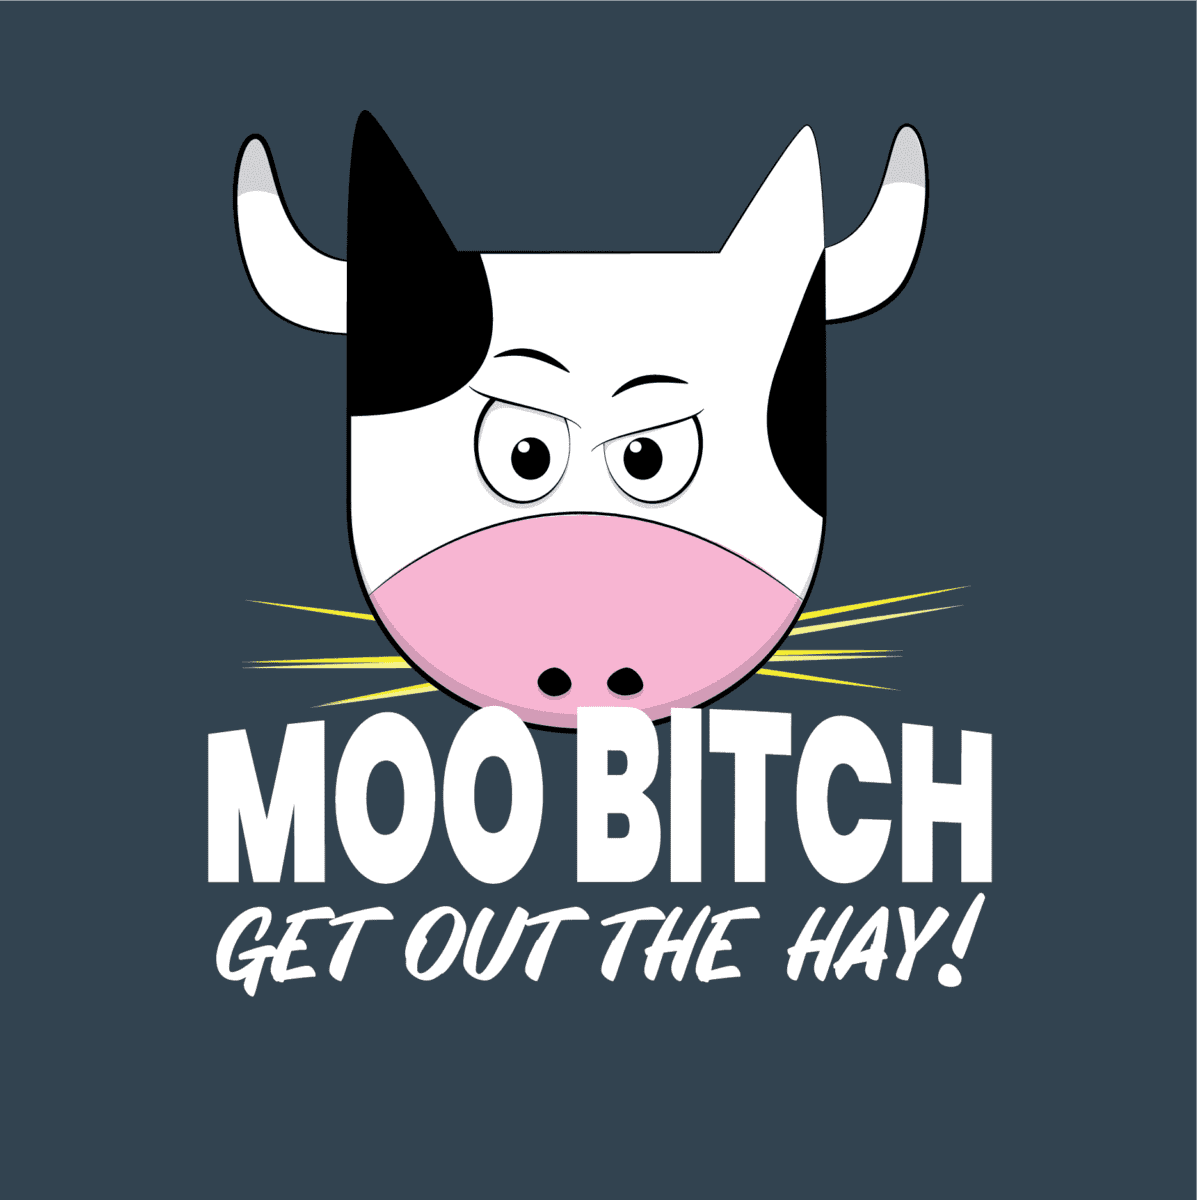 Moo Bitch Shirt Design